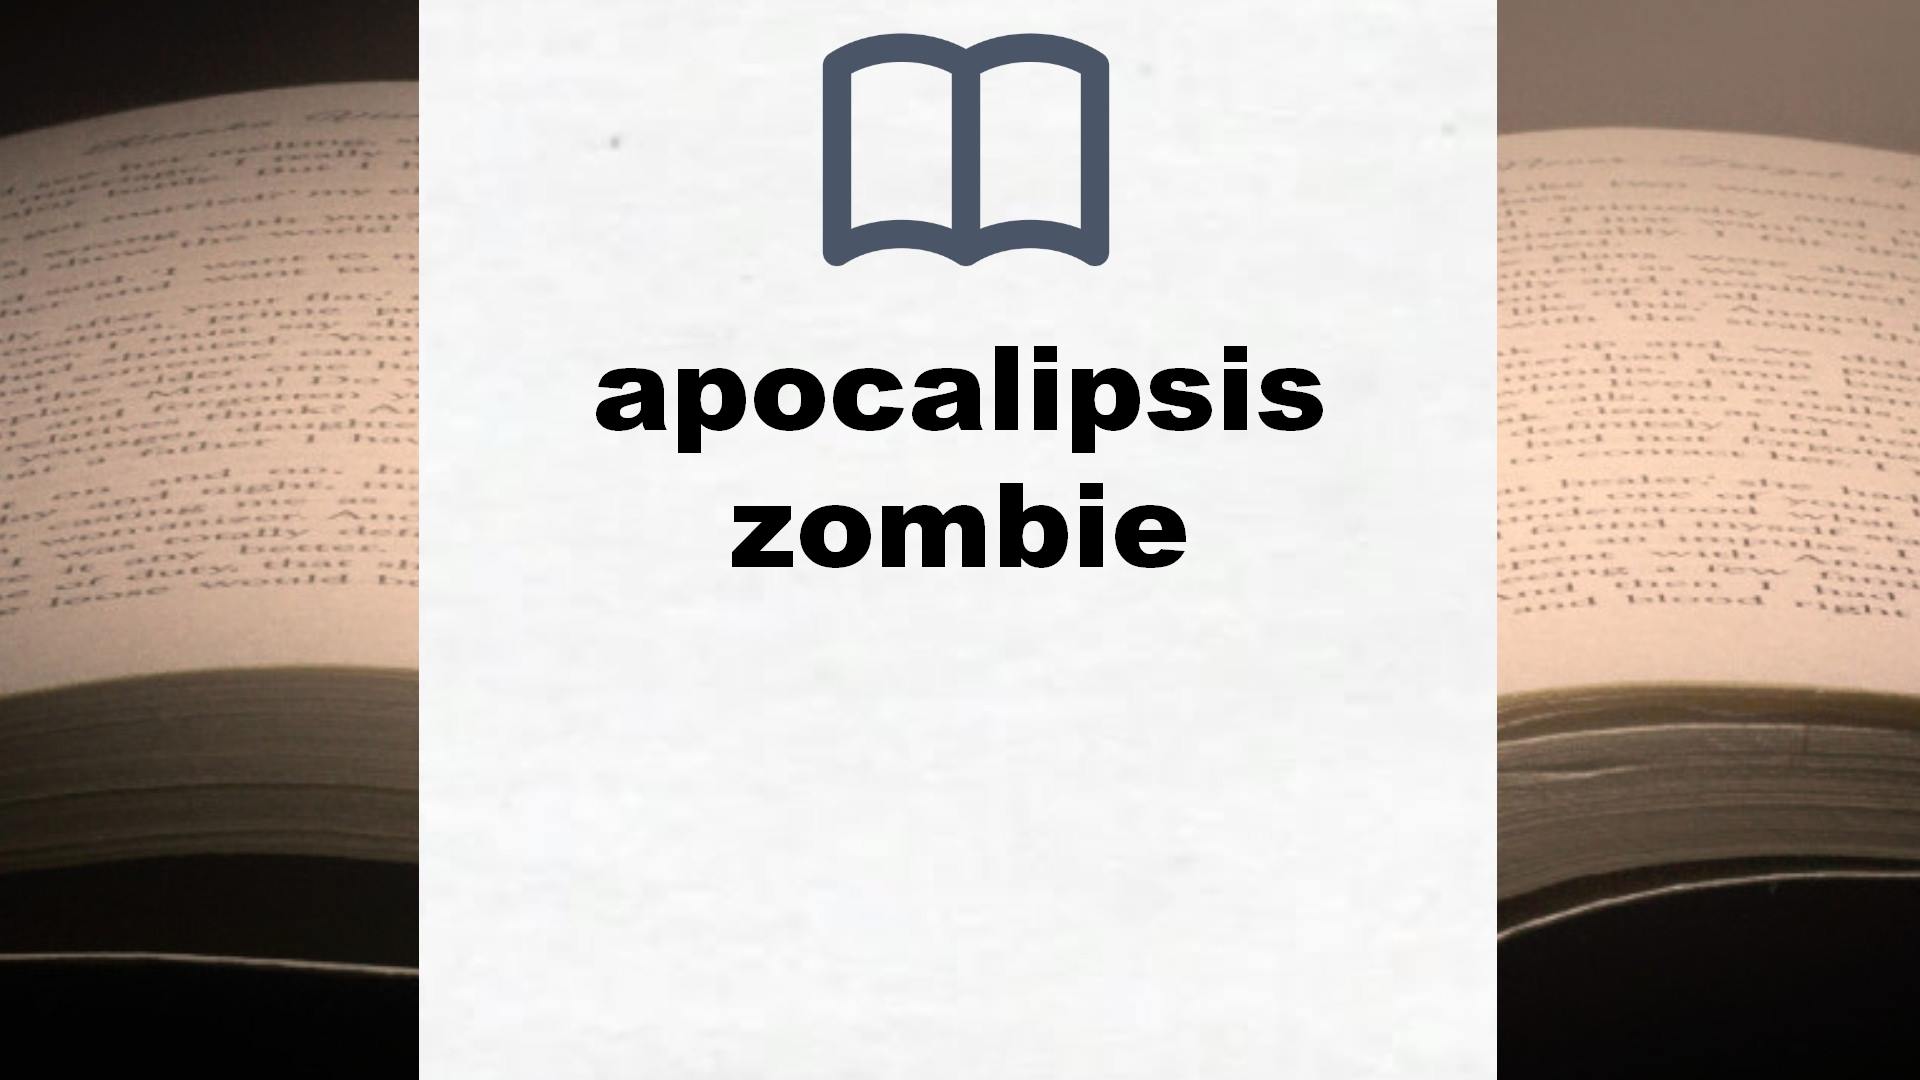 Libros sobre apocalipsis zombie